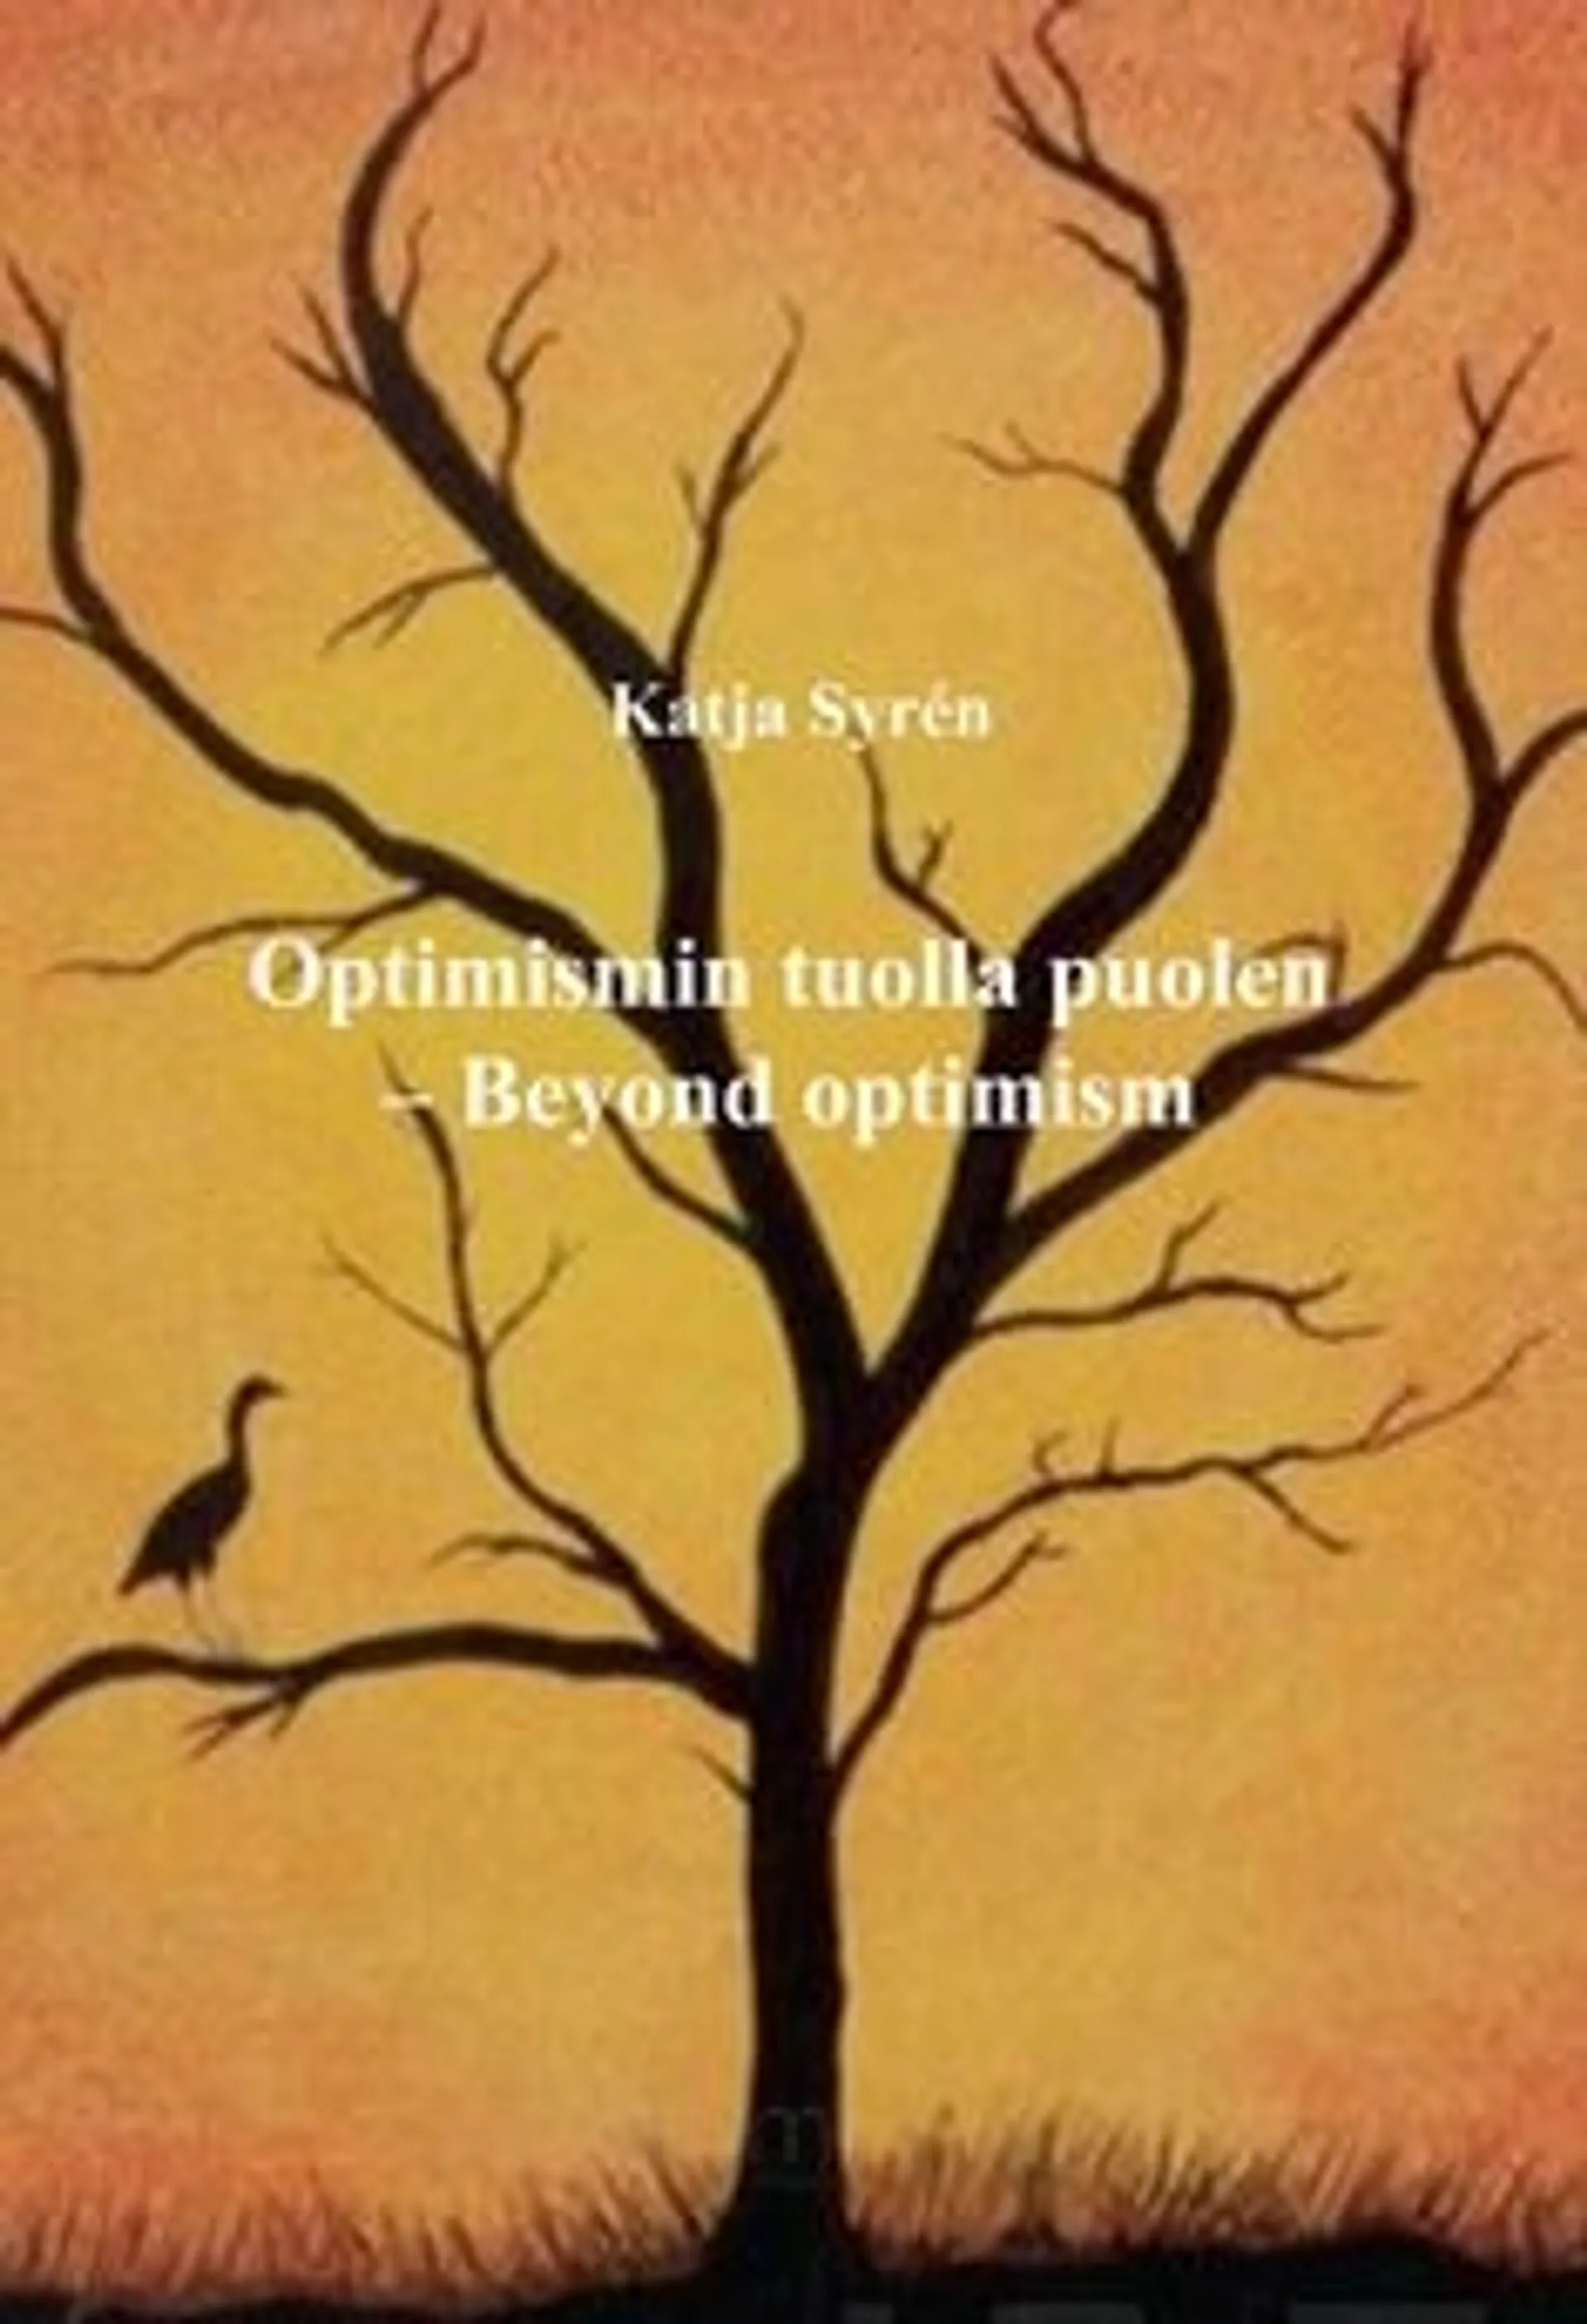 Syrén, Optimismin tuolla puolen - Beyond optimism